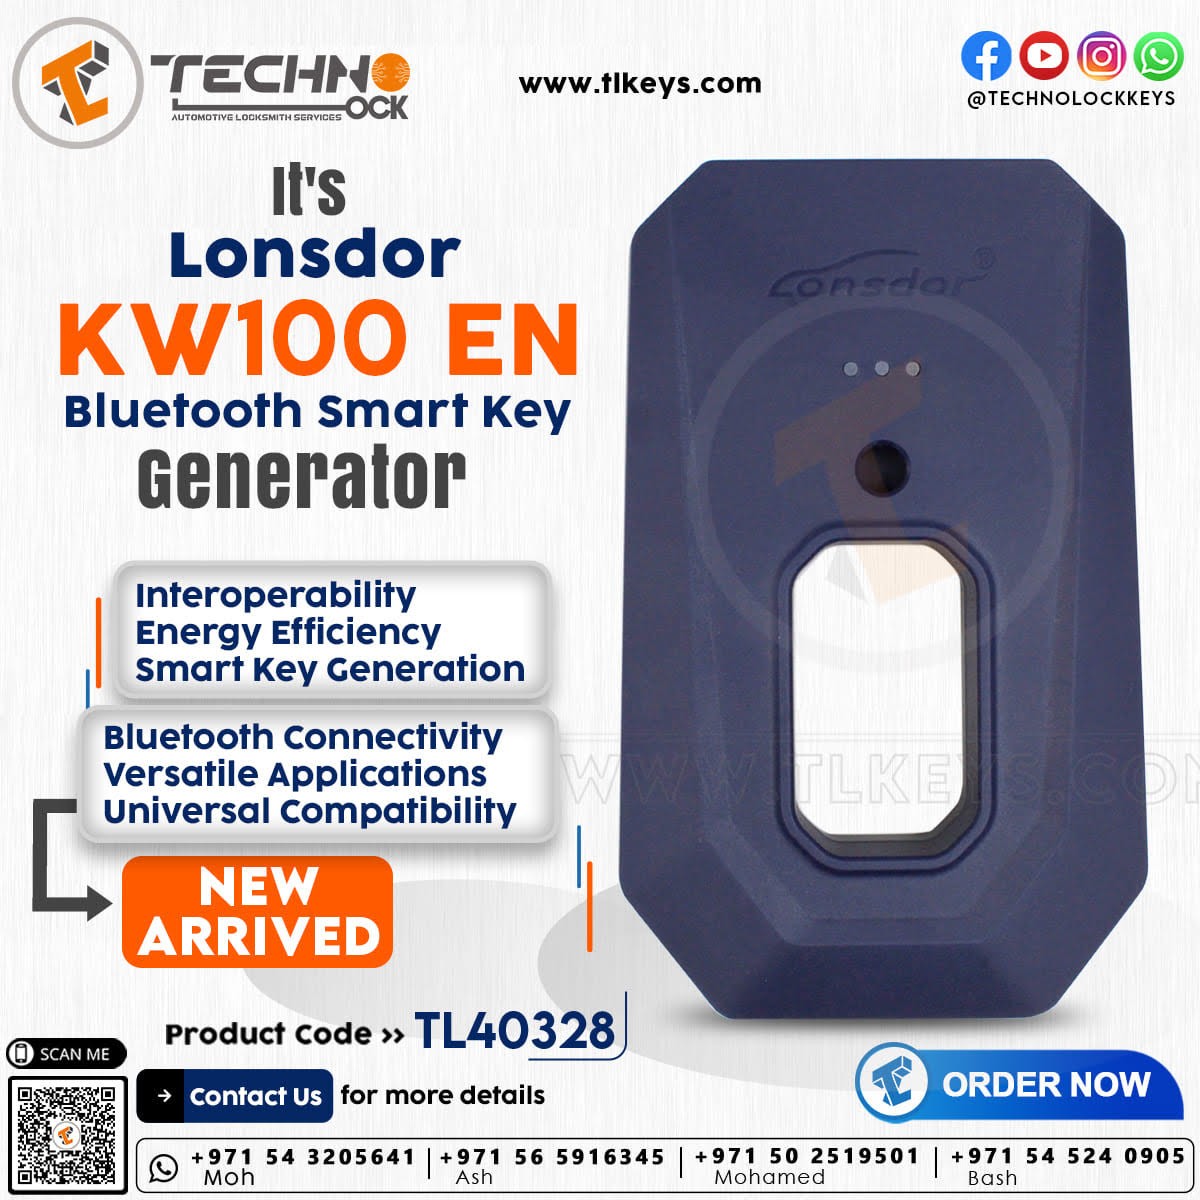 Lonsdor KW100 EN Bluetooth Smart Key Generator